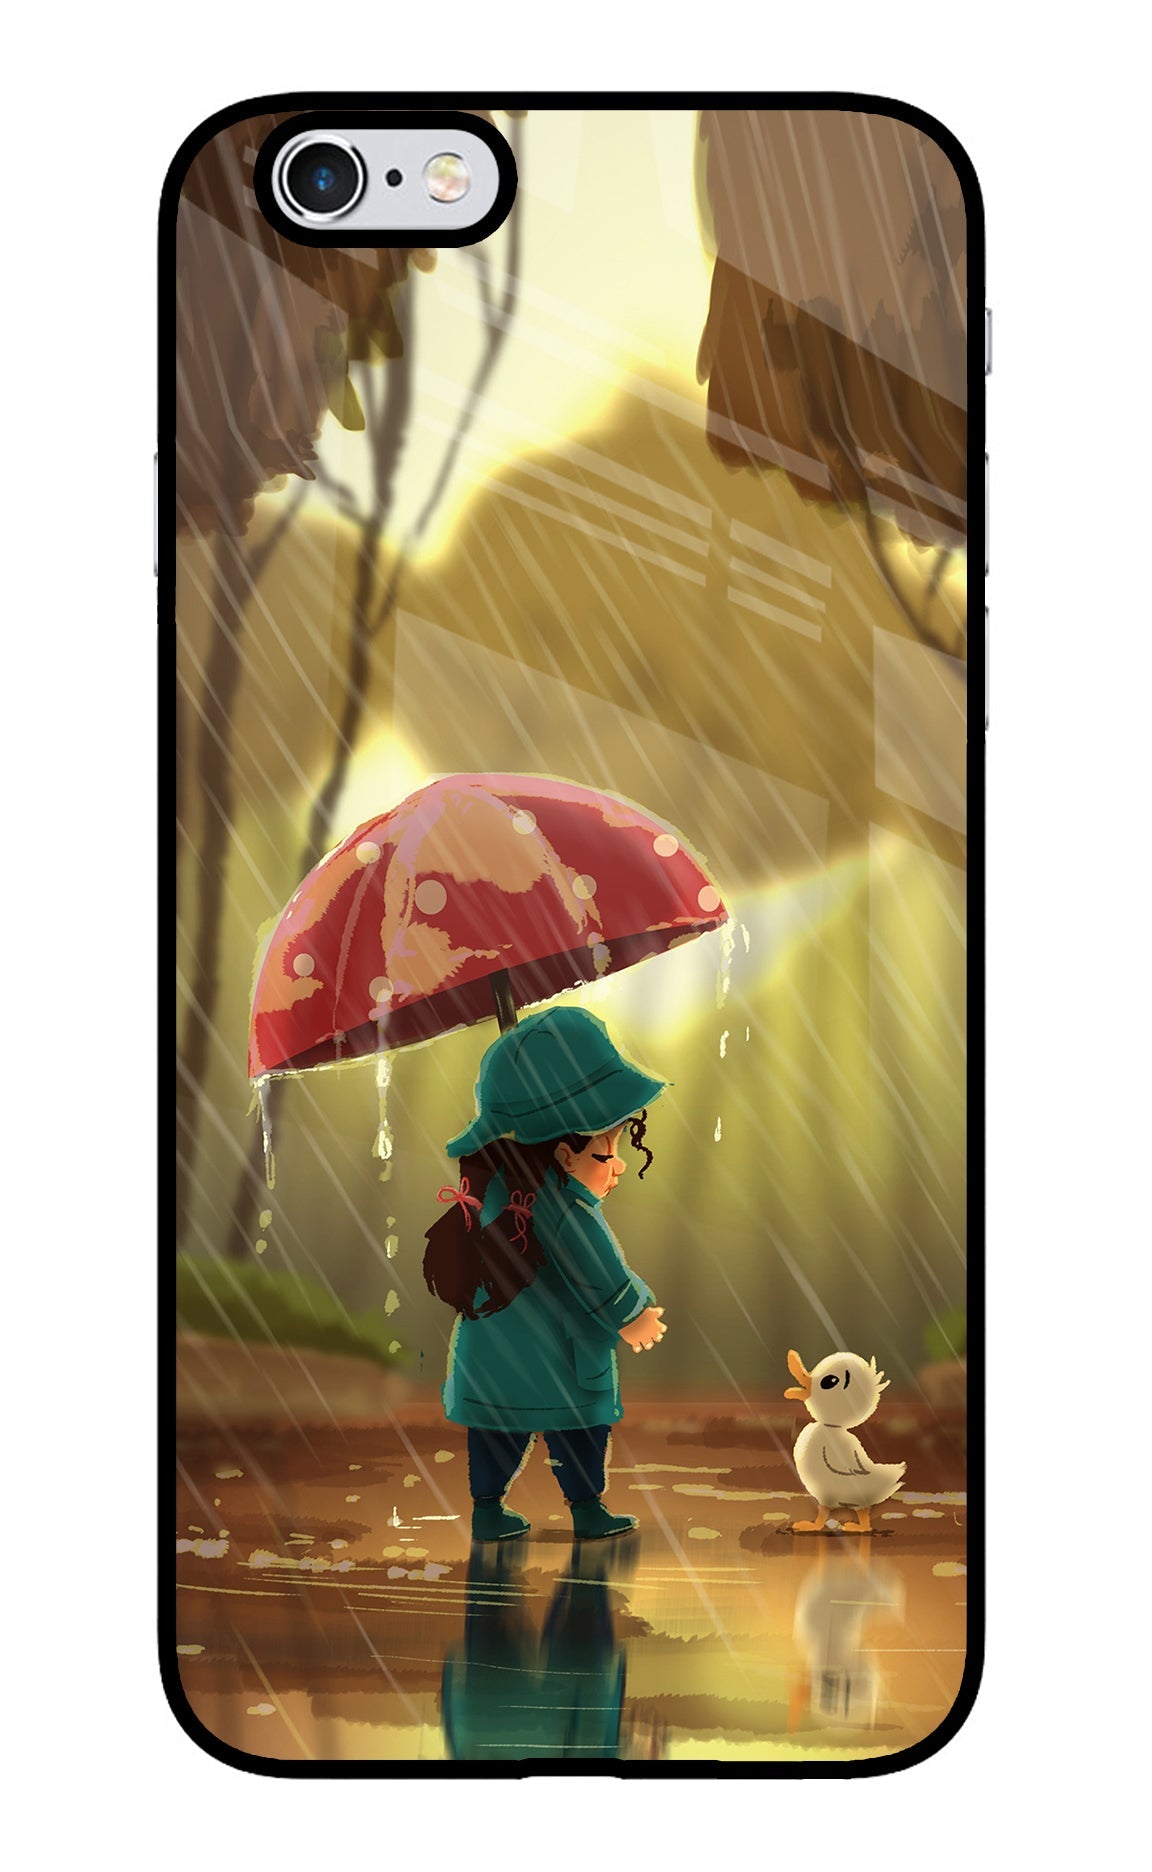 Rainy Day iPhone 6/6s Glass Case